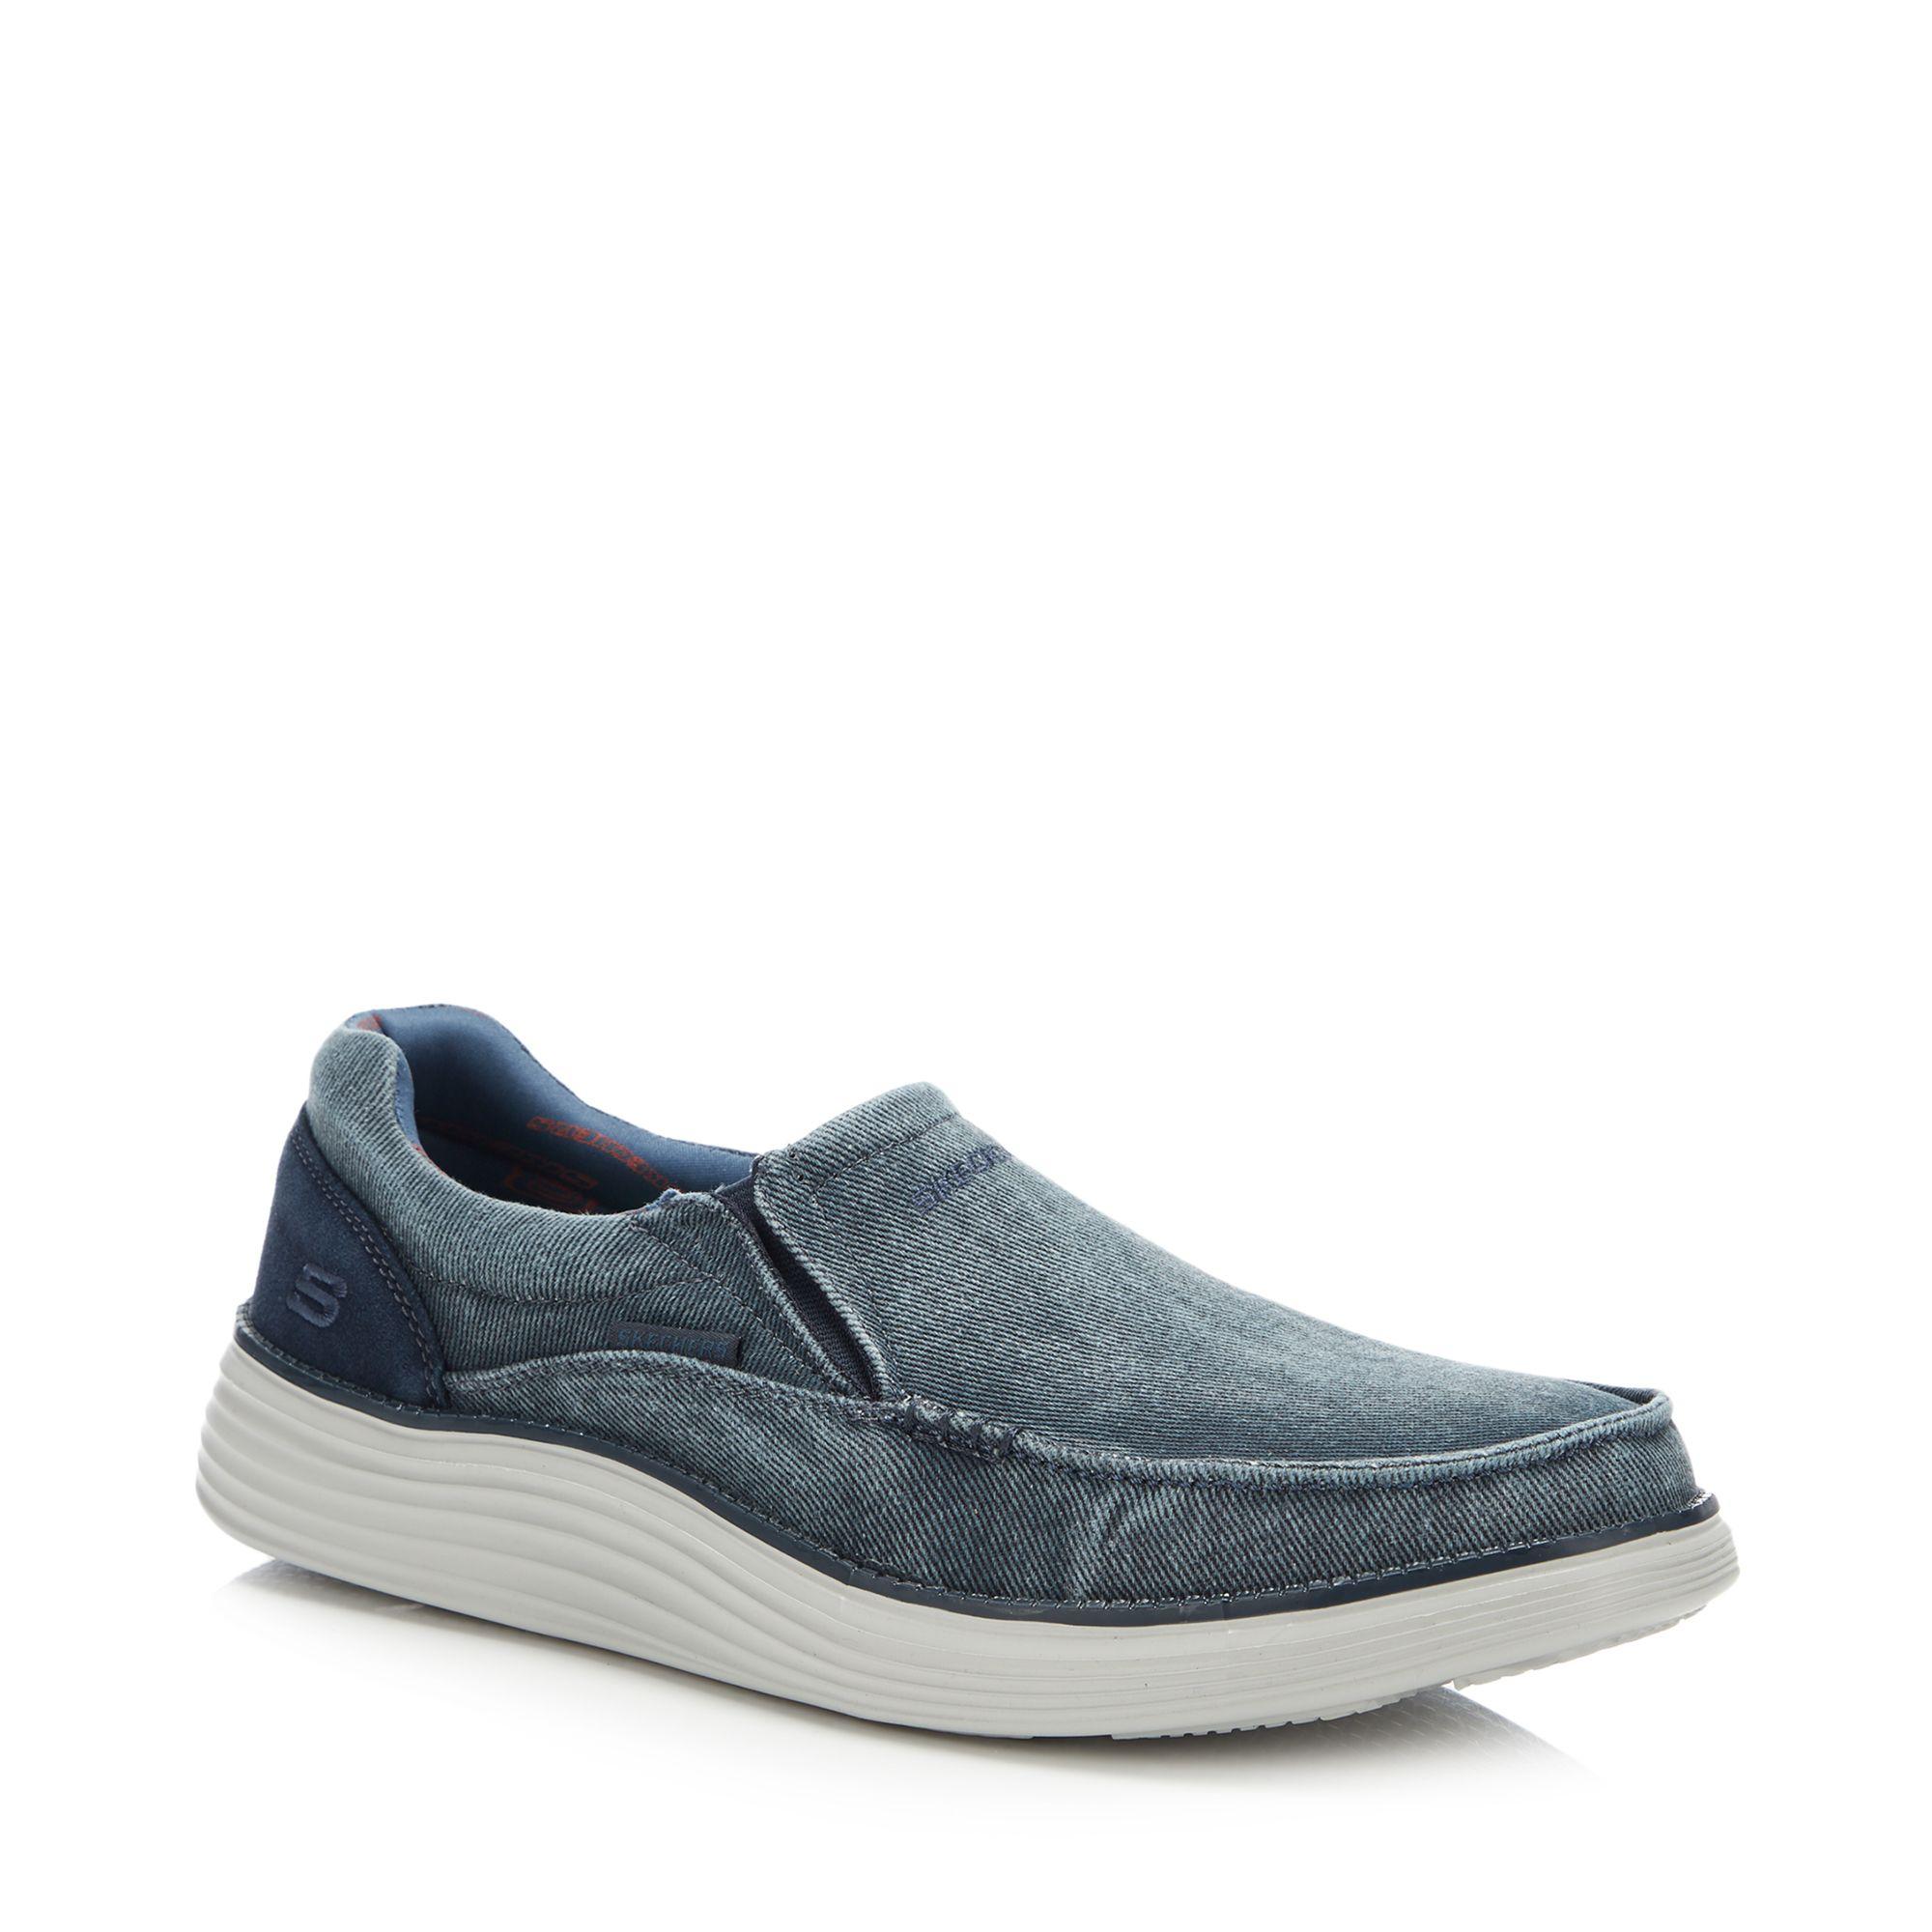 Skechers Men's Canvas 'status 2.0' Slip On Shoes in Blue for Men - Lyst